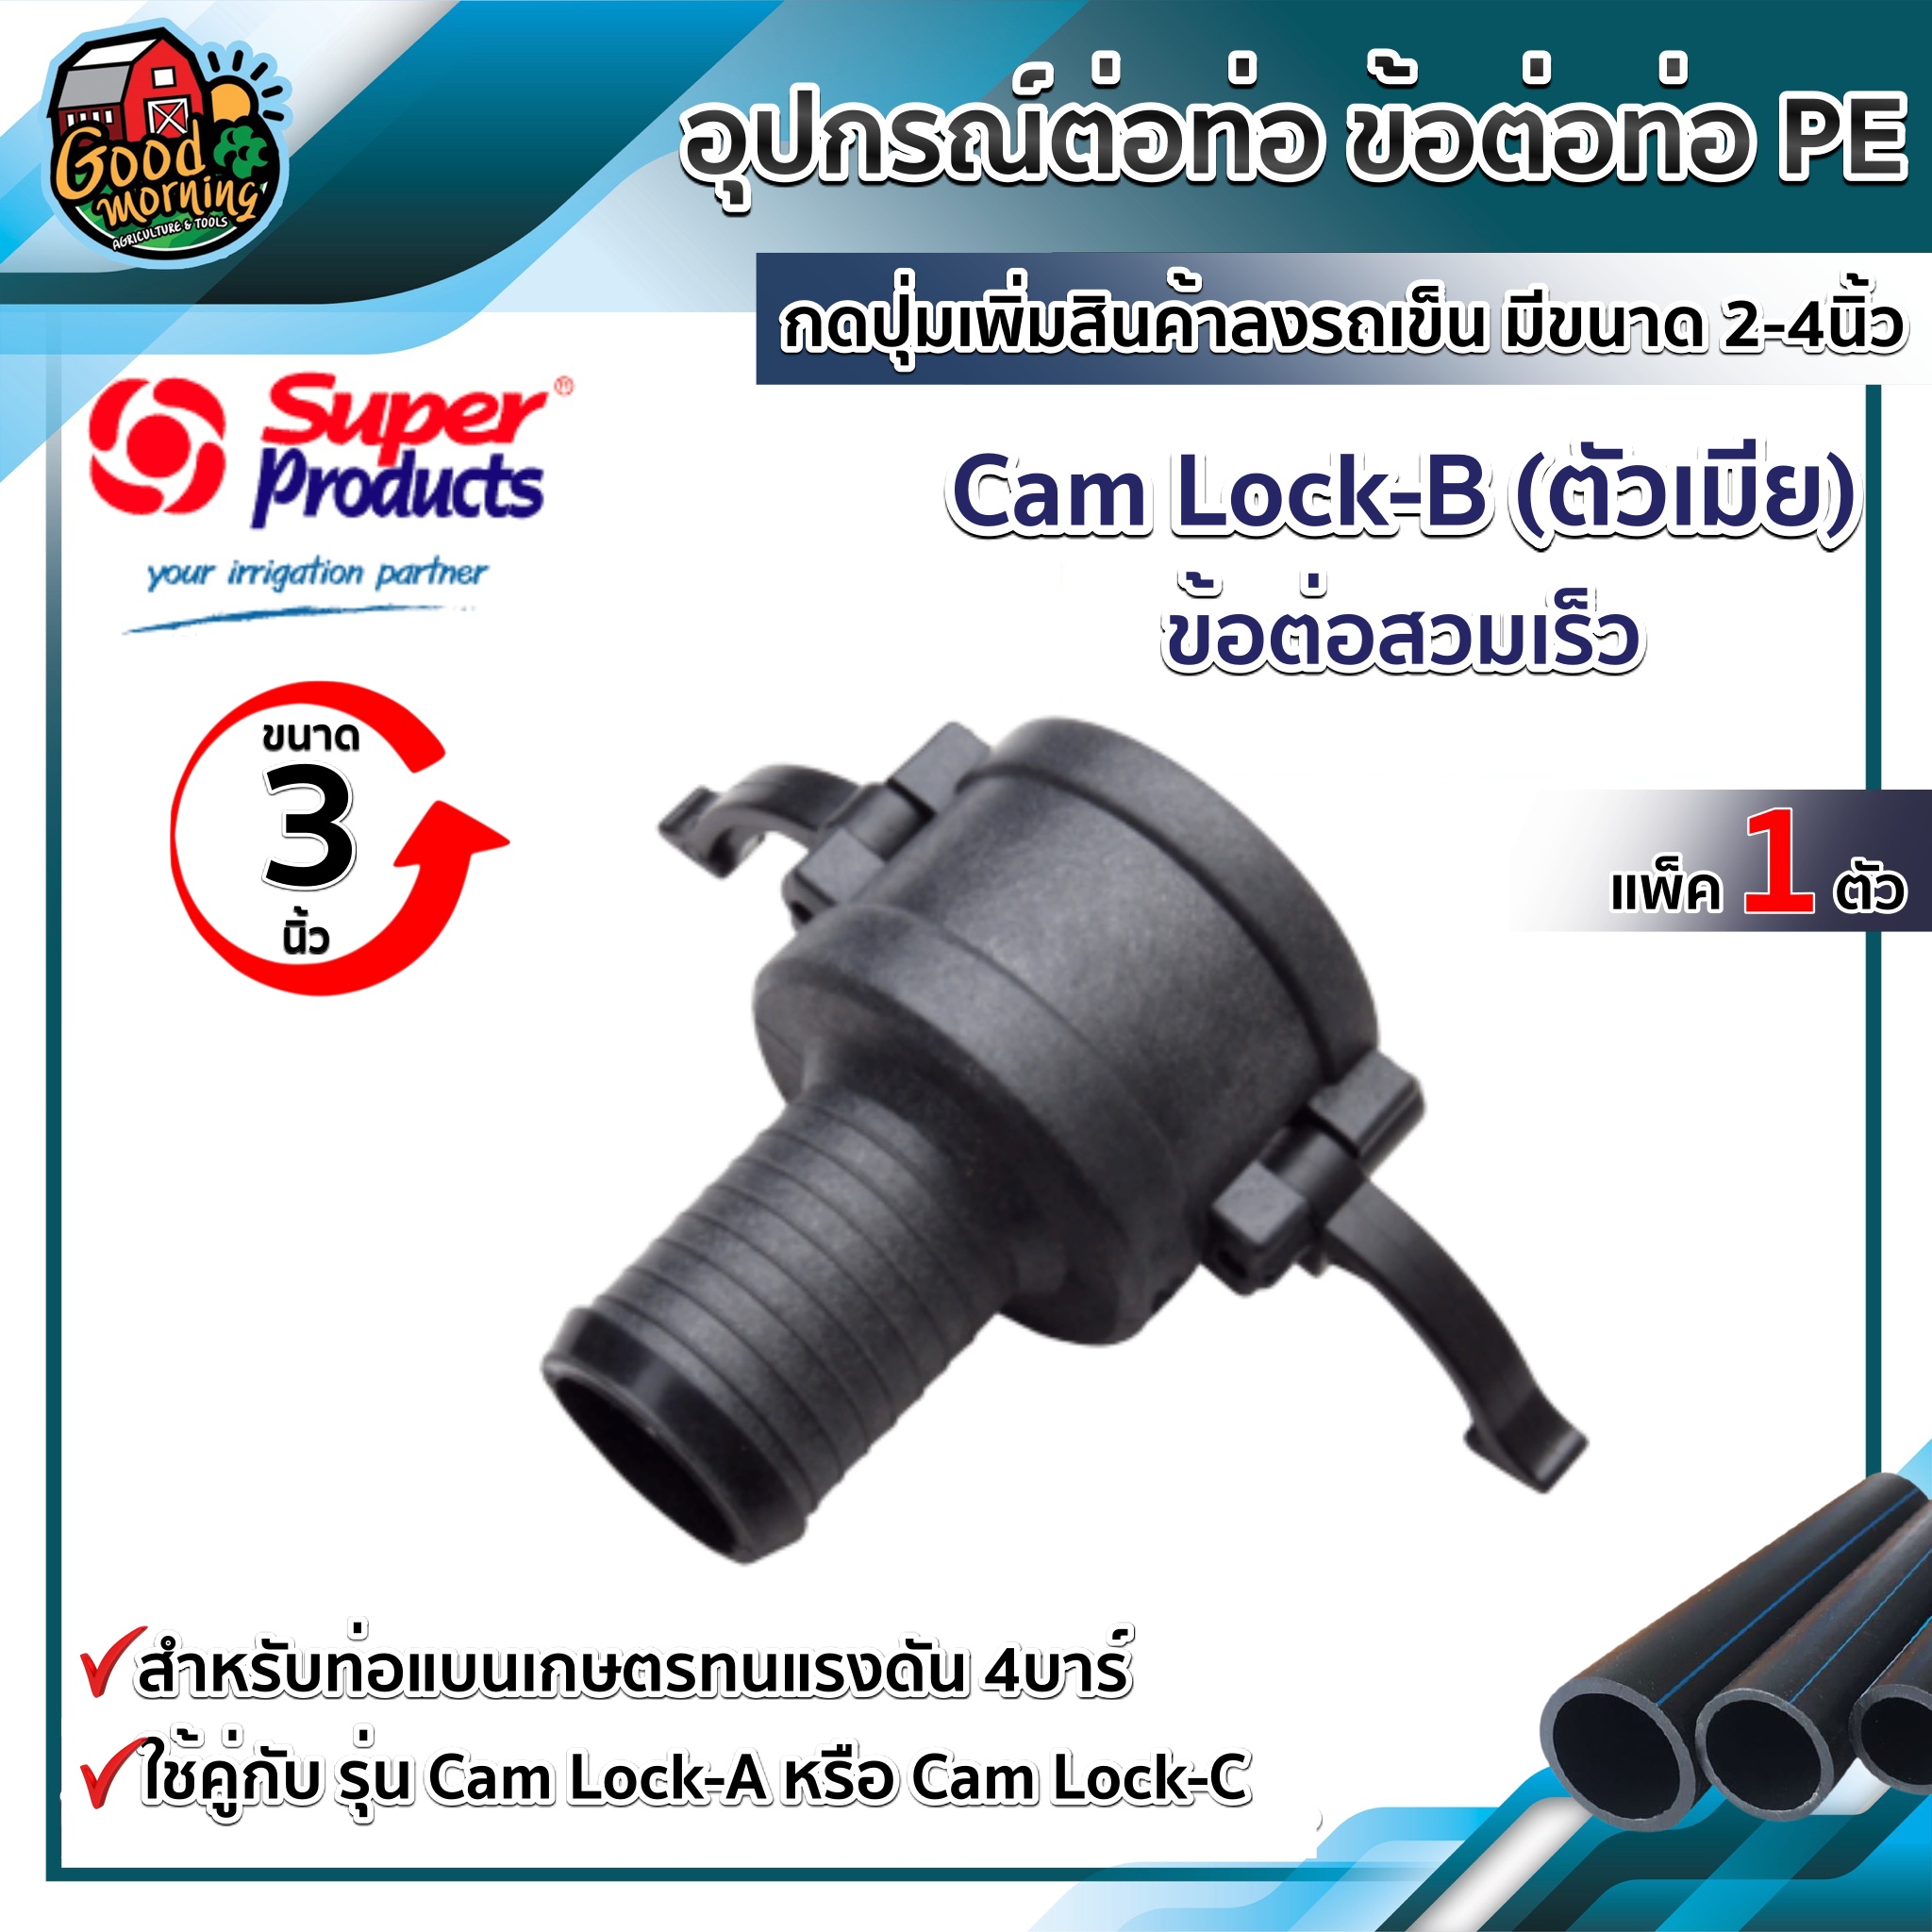 Cam Lock-B (ตัวเมีย) ข้อต่อสวมเร็ว Super Products สำหรับท่อแบนเกษตร ทนแรงดัน4บาร์ #กดปุ่มเพิ่มสินค้าลงรถเข็น มีขนาด 2-4 นิ้ว ระบบน้ำ แคมป์ล็อค ข้อต่อ